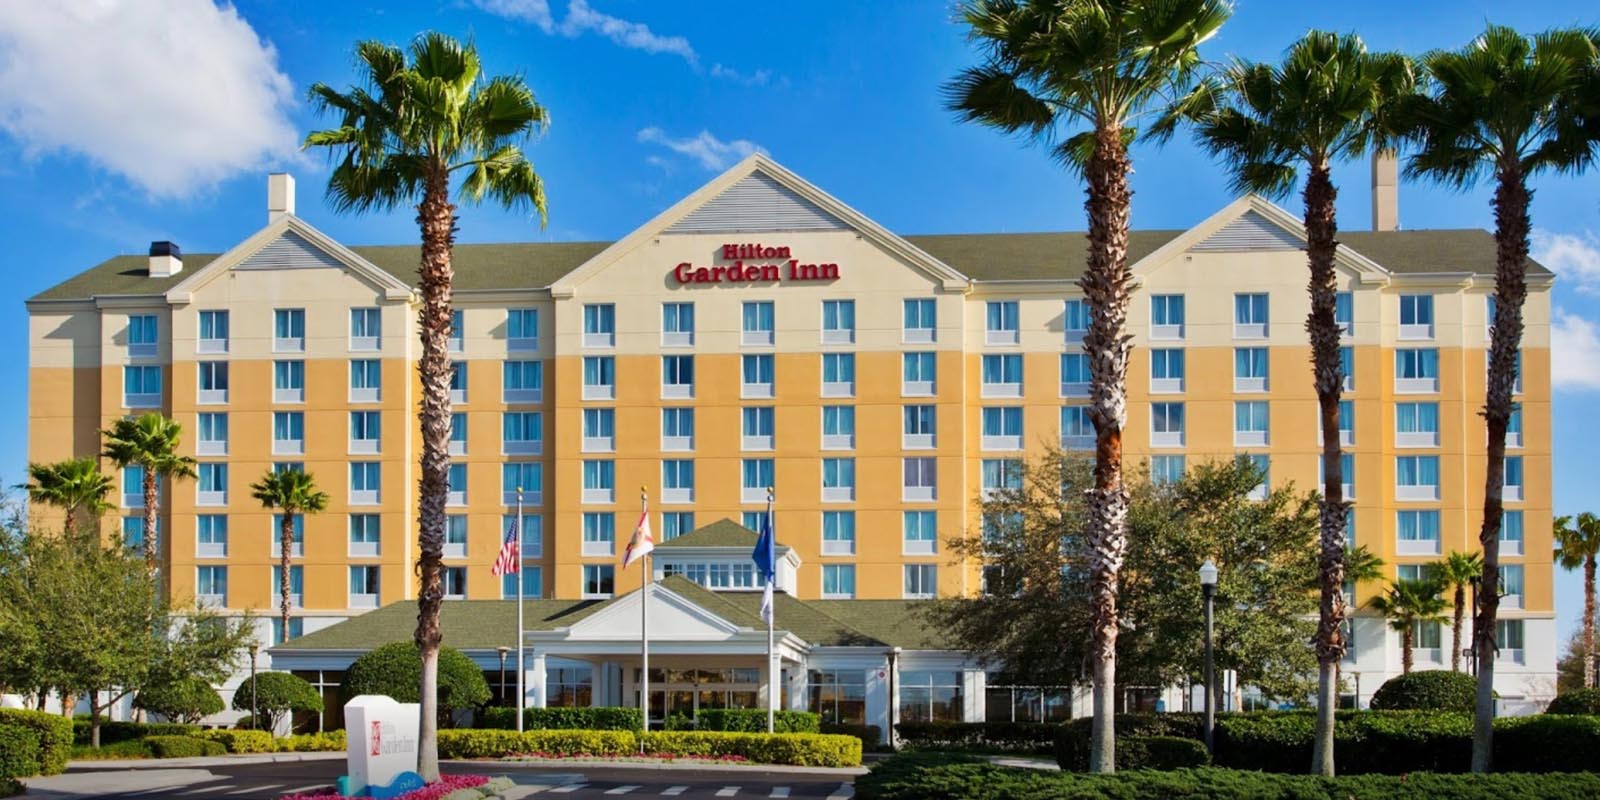 Hilton Garden Inn - Seaworld Orlando FL